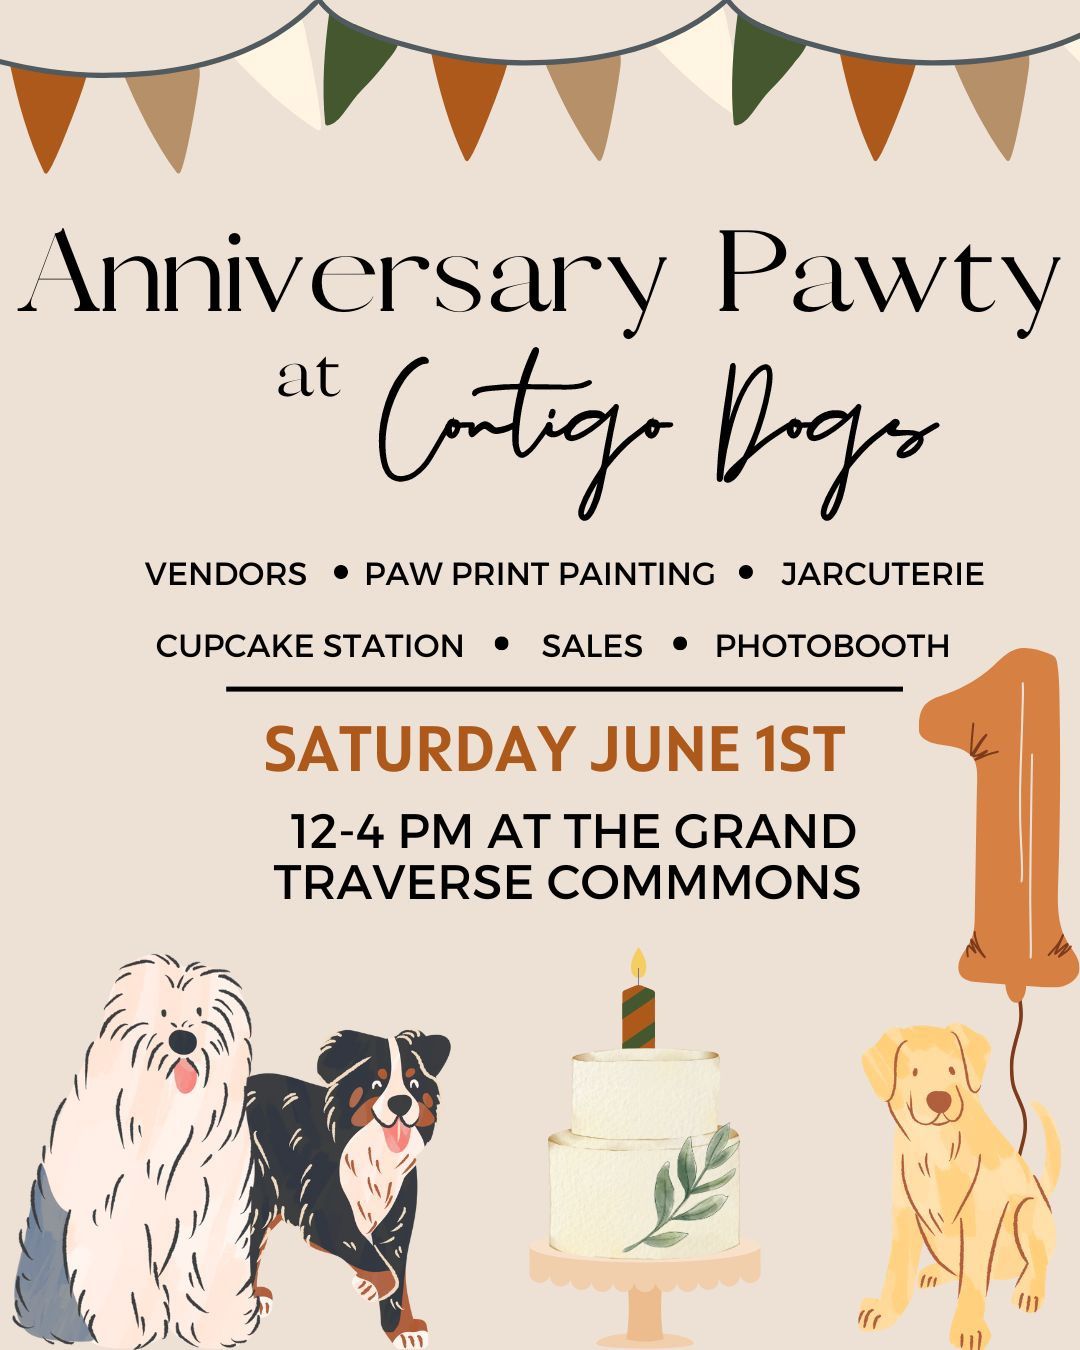 Anniversary Pawty at Contigo Dogs